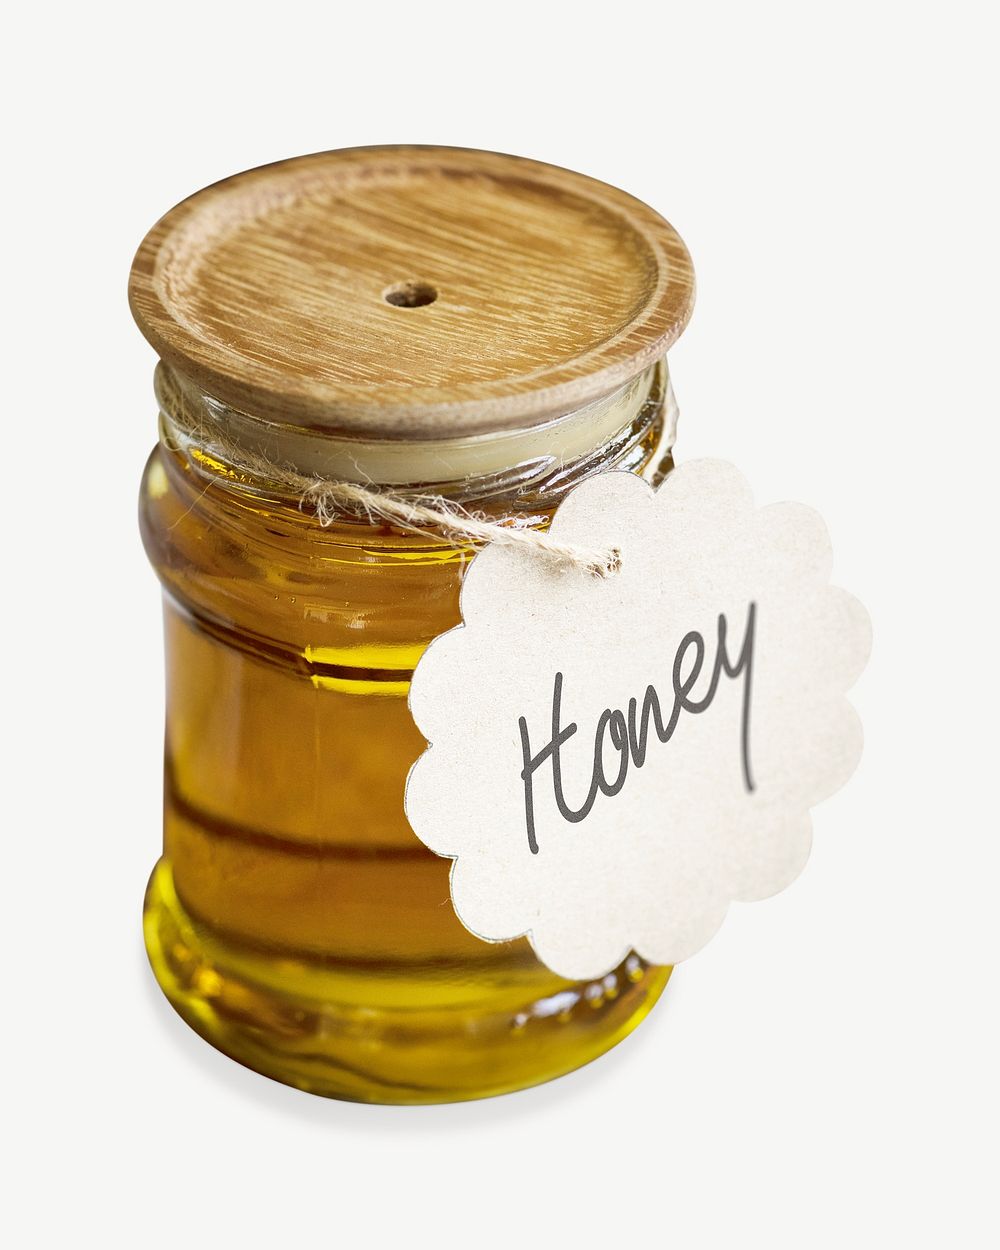 Organic honey collage element psd